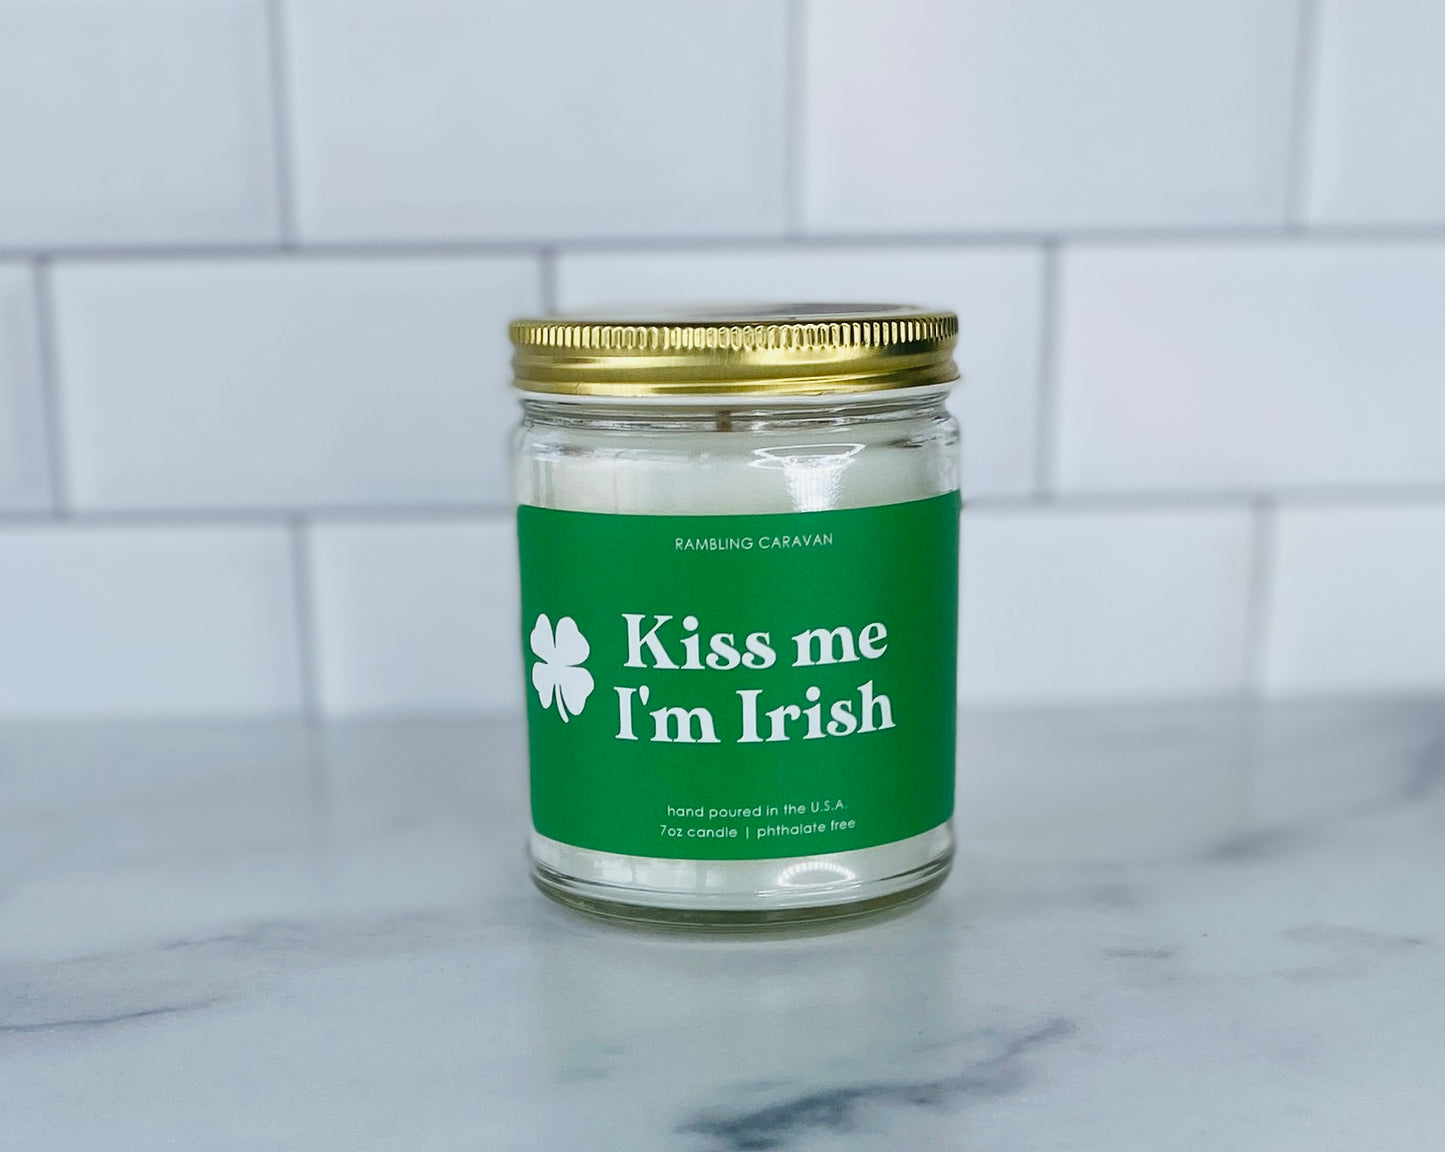 Kiss me I'm Irish Candle